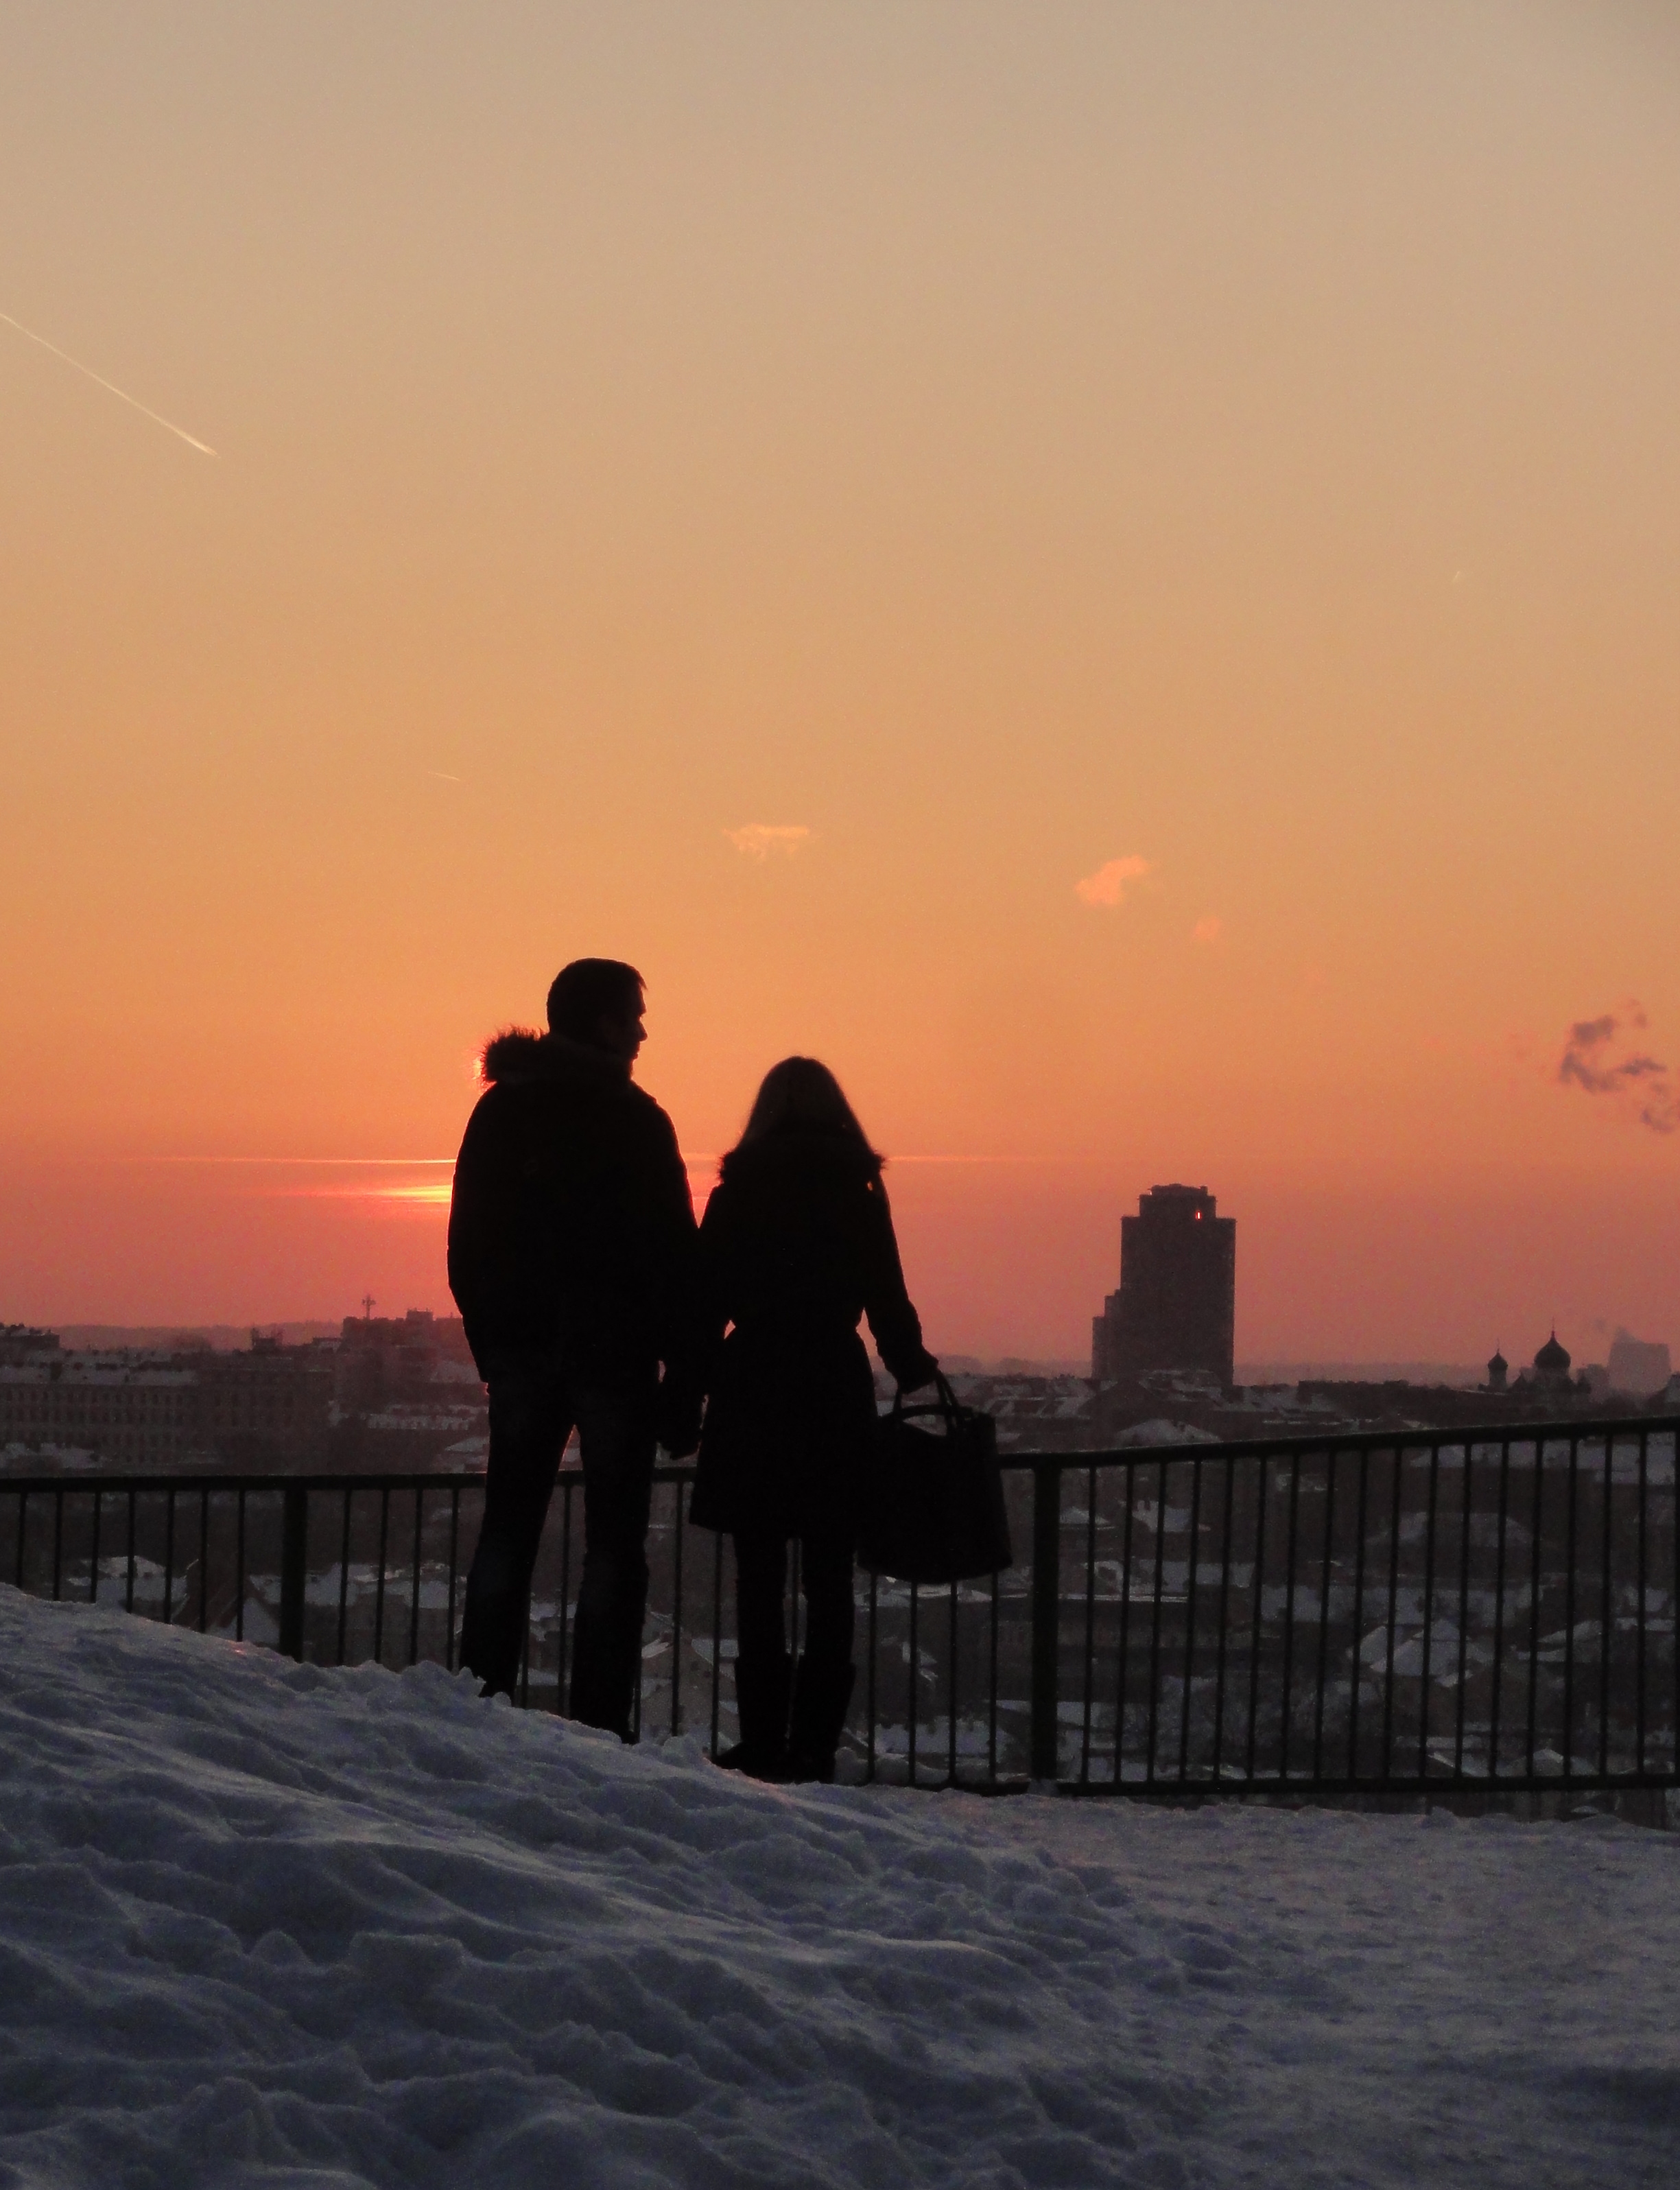 File:Couple at sunset in Vilnius (8178264458).jpg - Wikimedia Commons